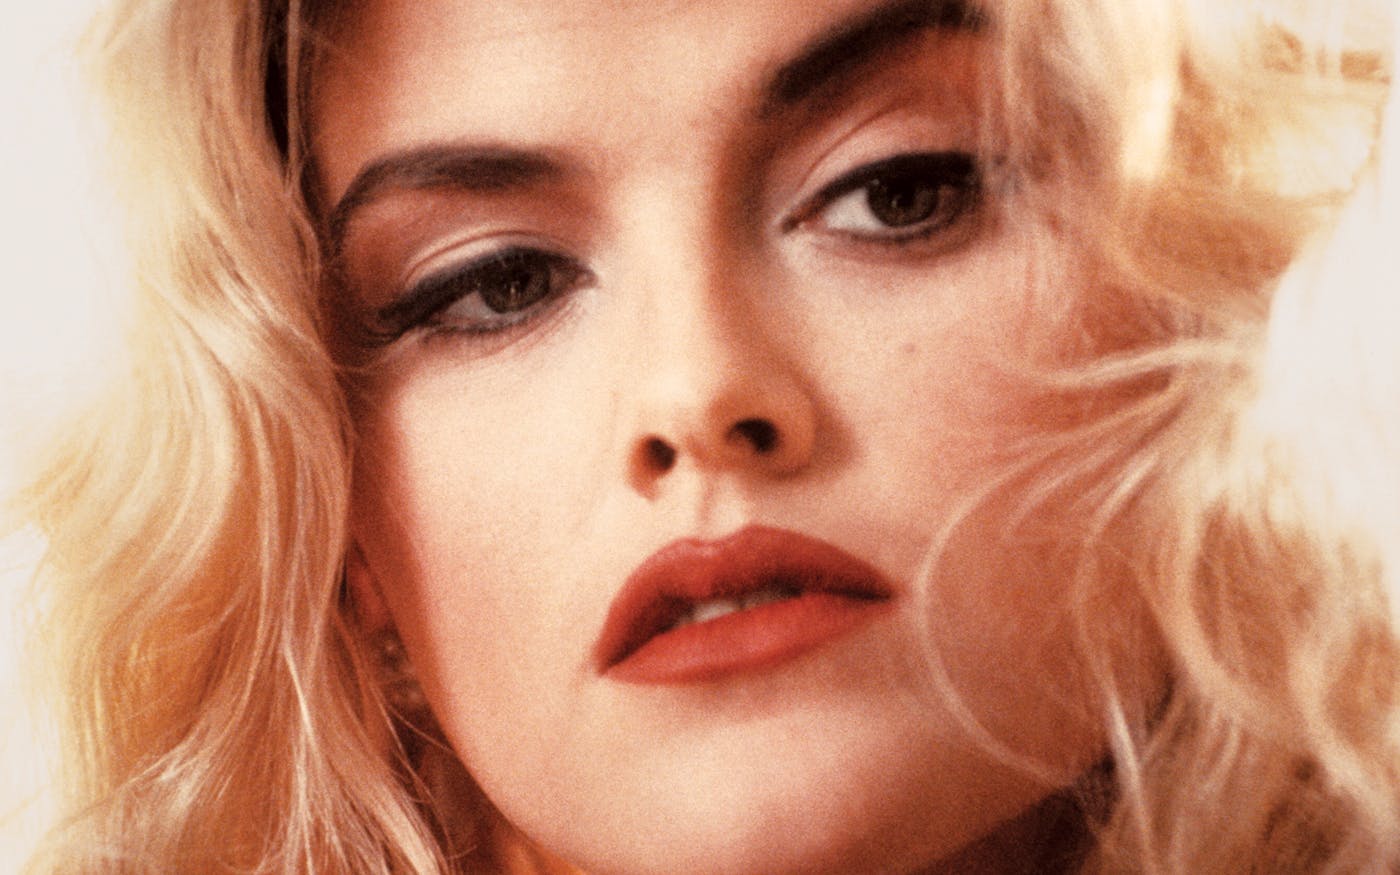 When cameras were off, Anna Nicole Smith was still Vicki Lynn, friends say  - ABC News